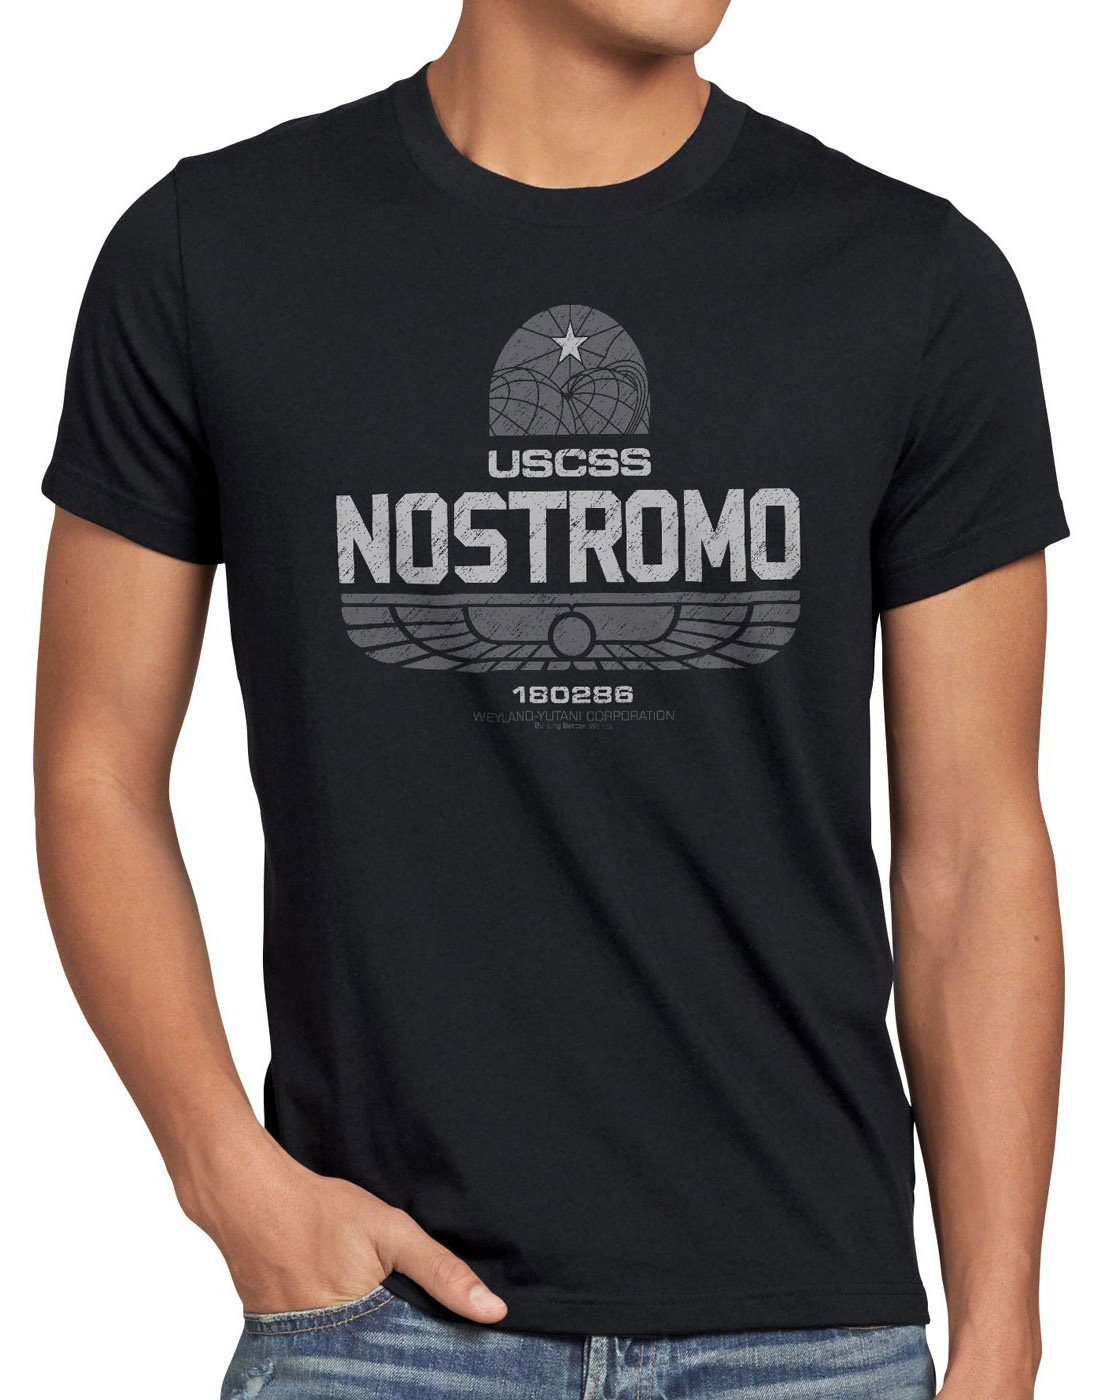 predator film xenomorph box USCSS T-Shirt vs Herren 180286 schwarz kino alien style3 Print-Shirt Nostromo